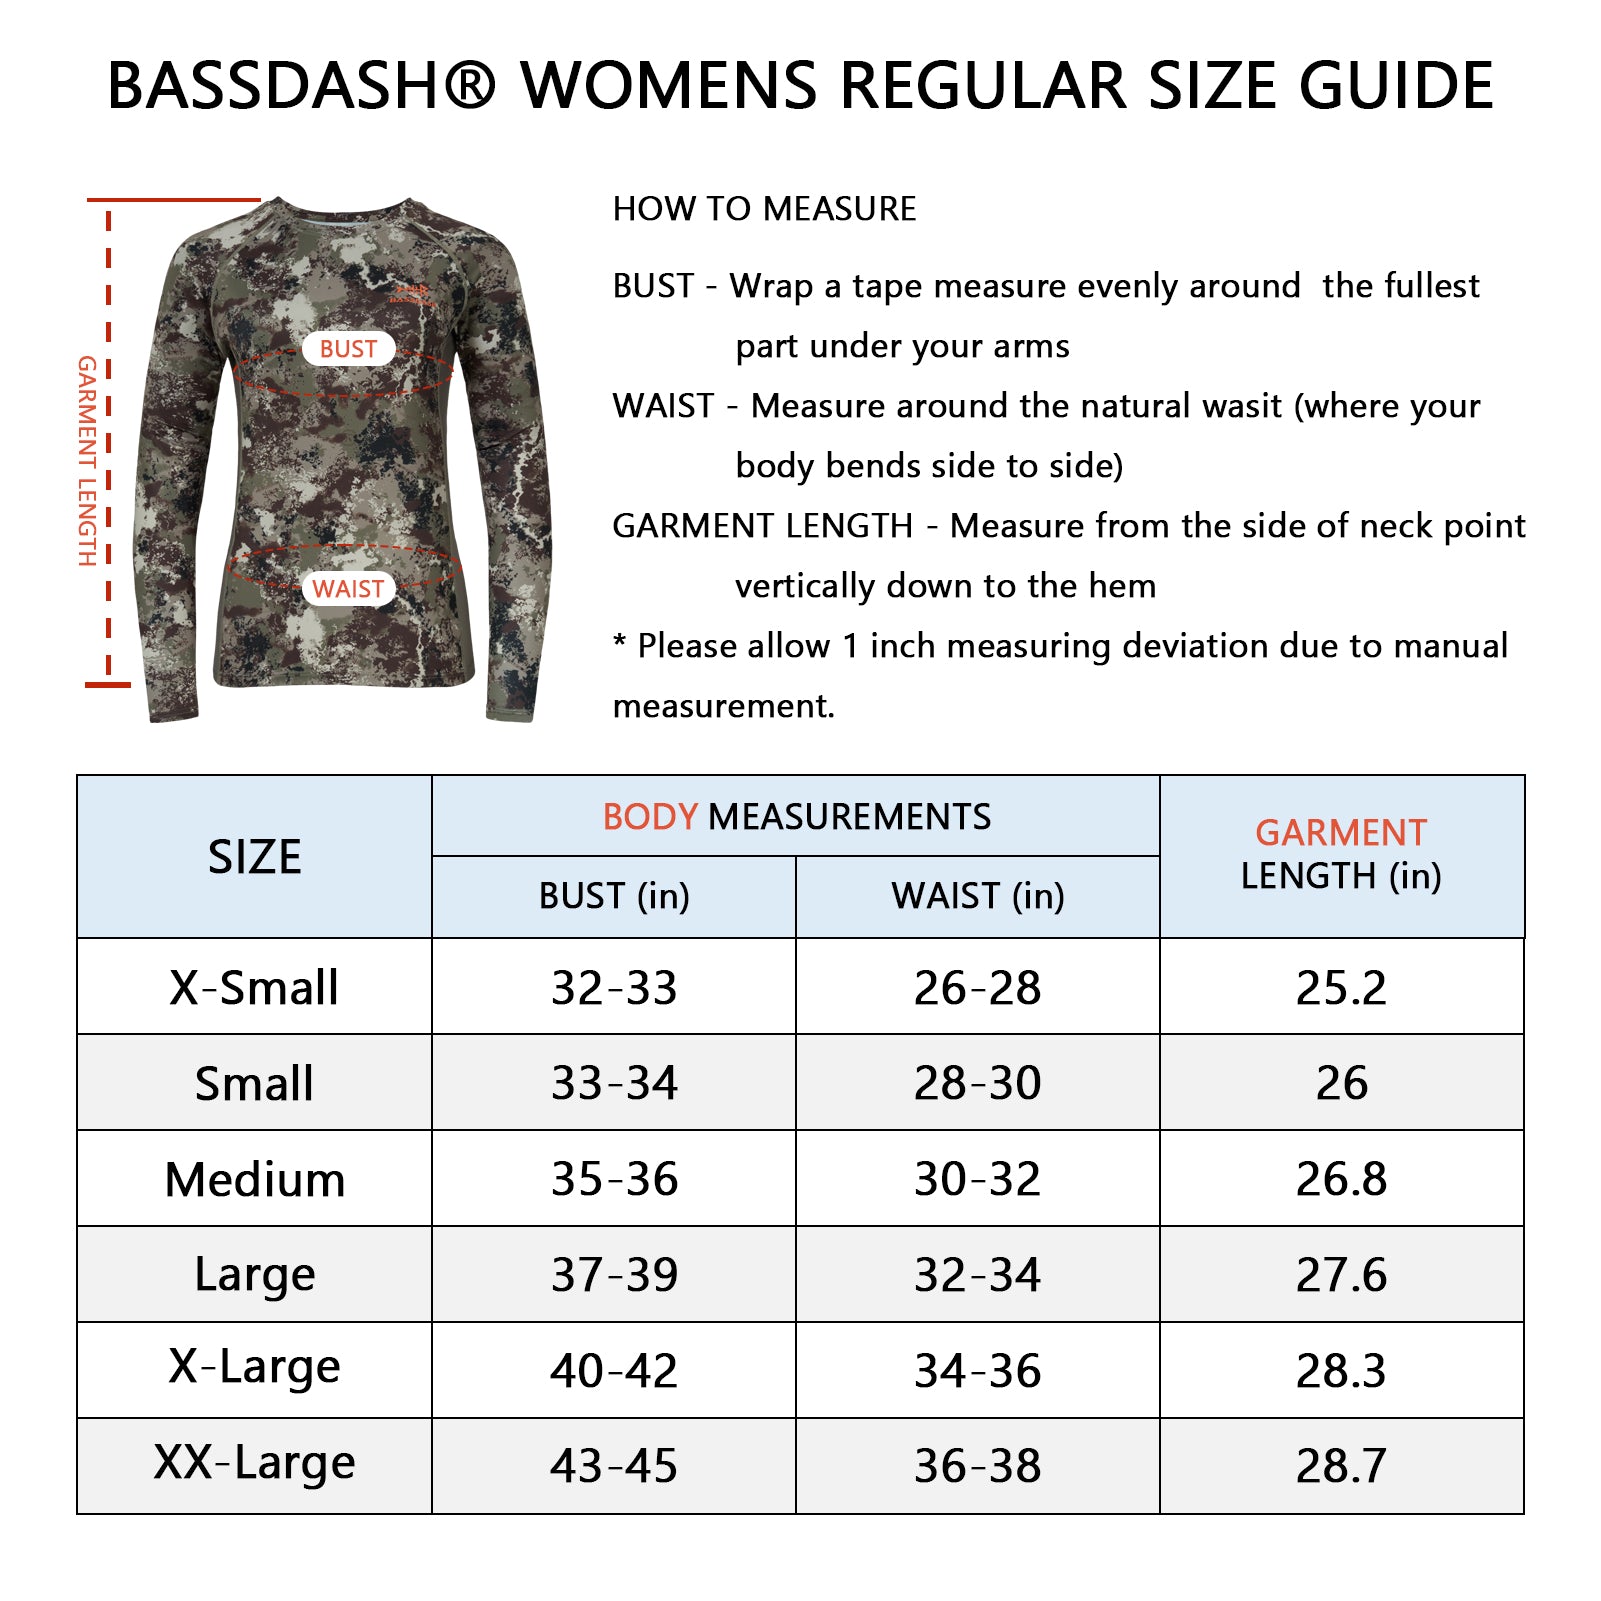 Personalized Bass Fishing Shirts Tropical leaves pattern, Bass